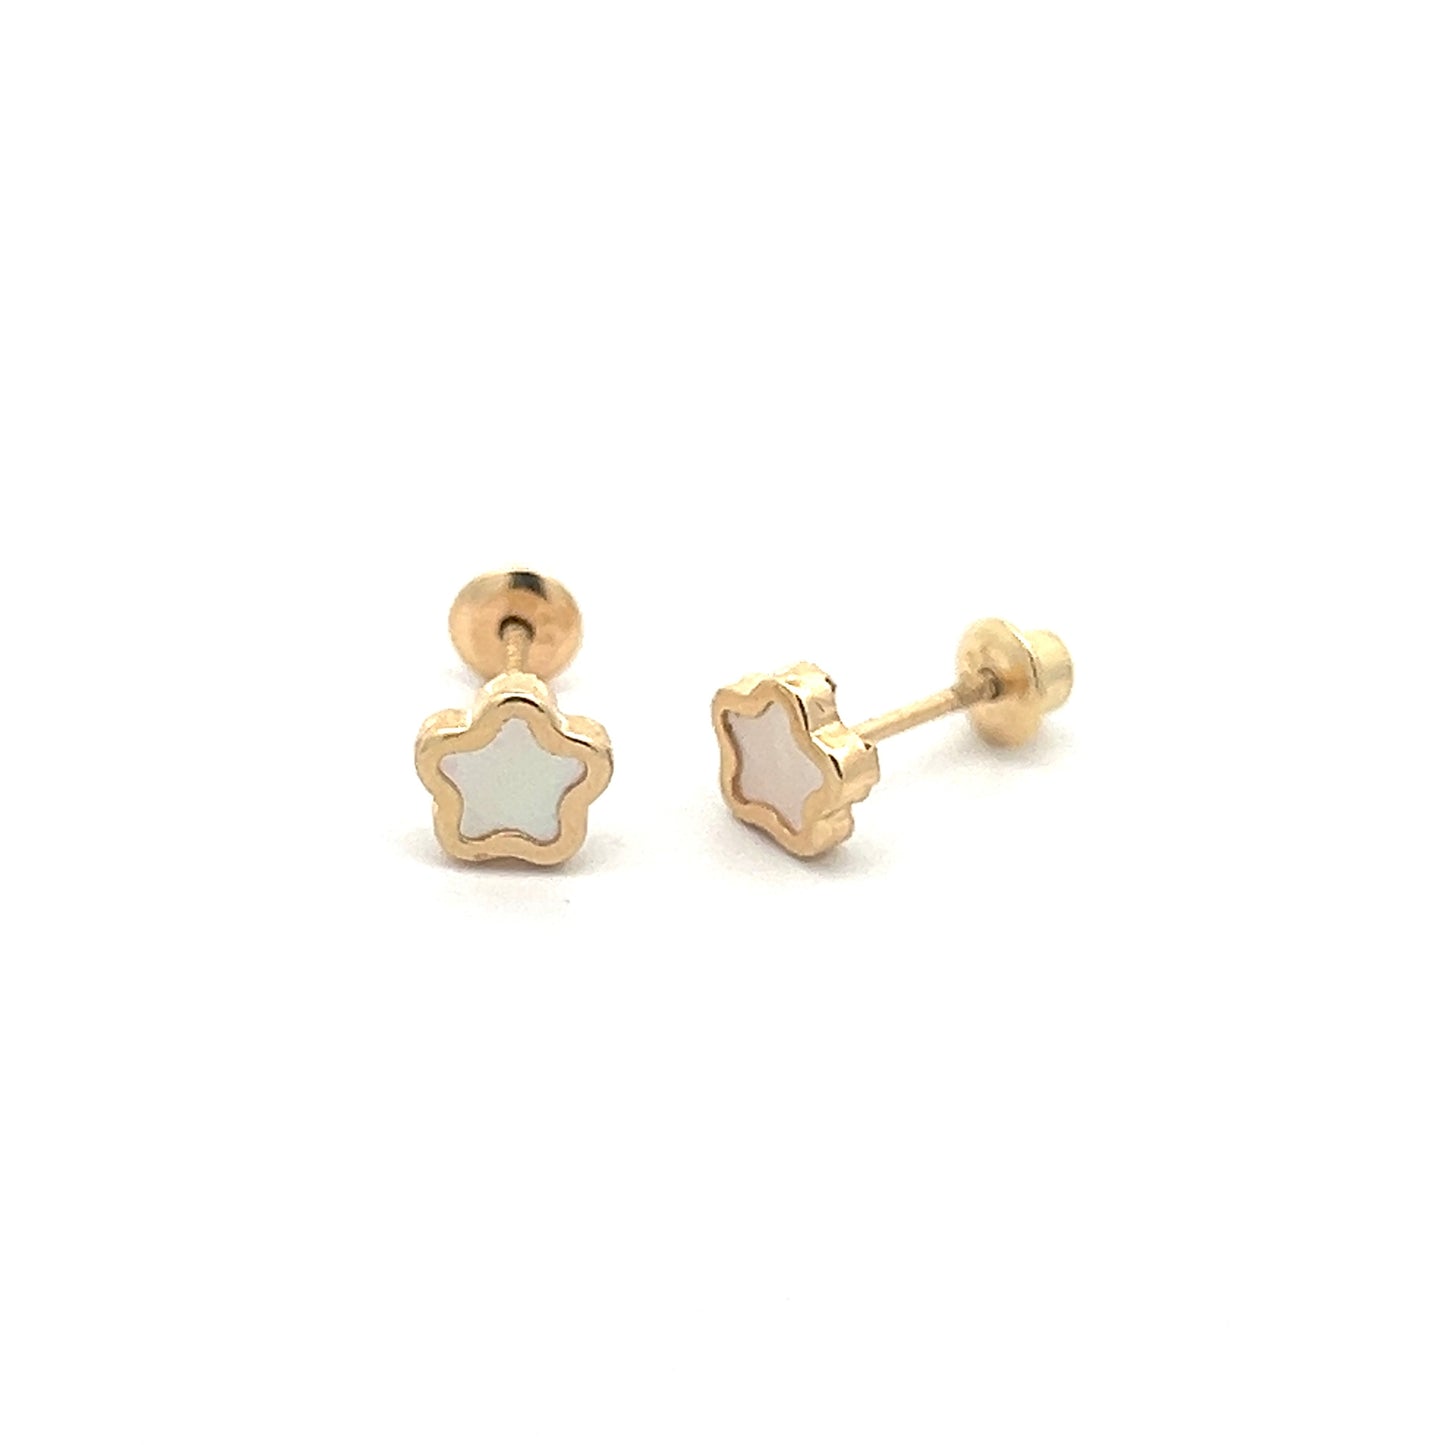 Gold & Colored Stone  Flower Screwback Earrings